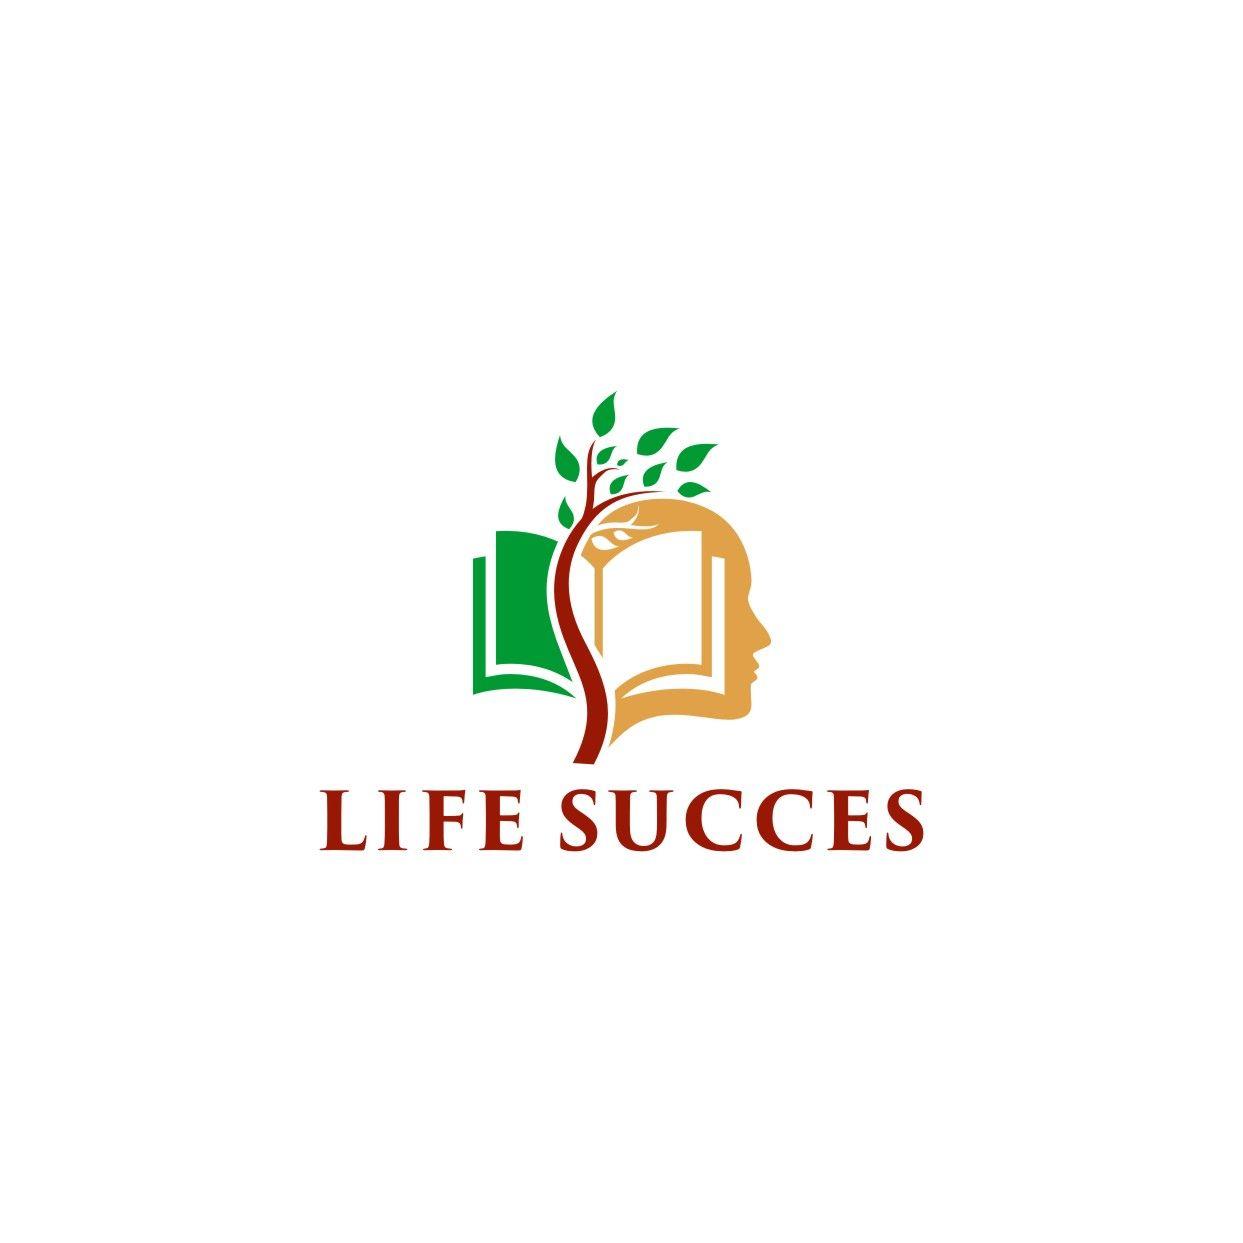 Coaching Logo - Modern, Bold, Life Coaching Logo Design for Life Succes by creative ...